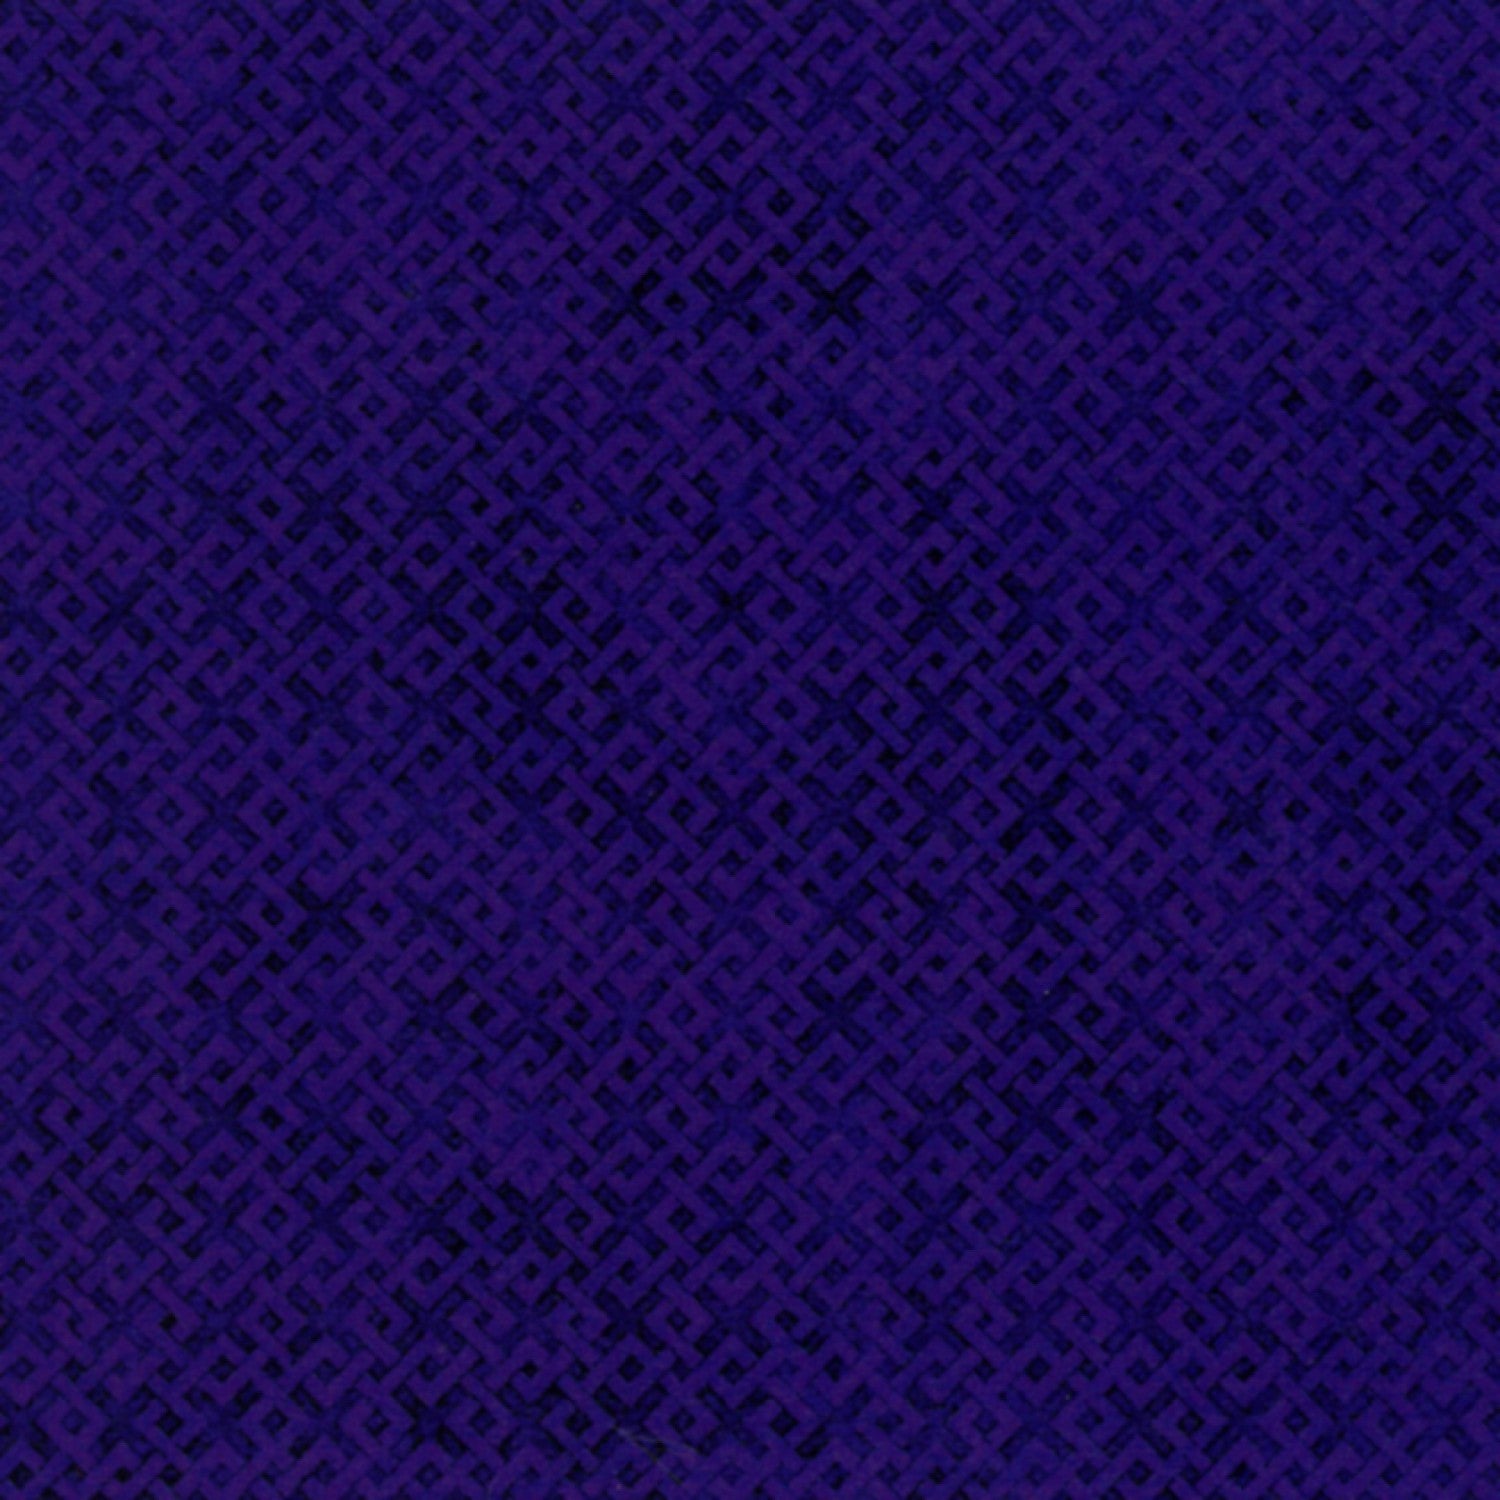 Criss Cross Texture - Purple